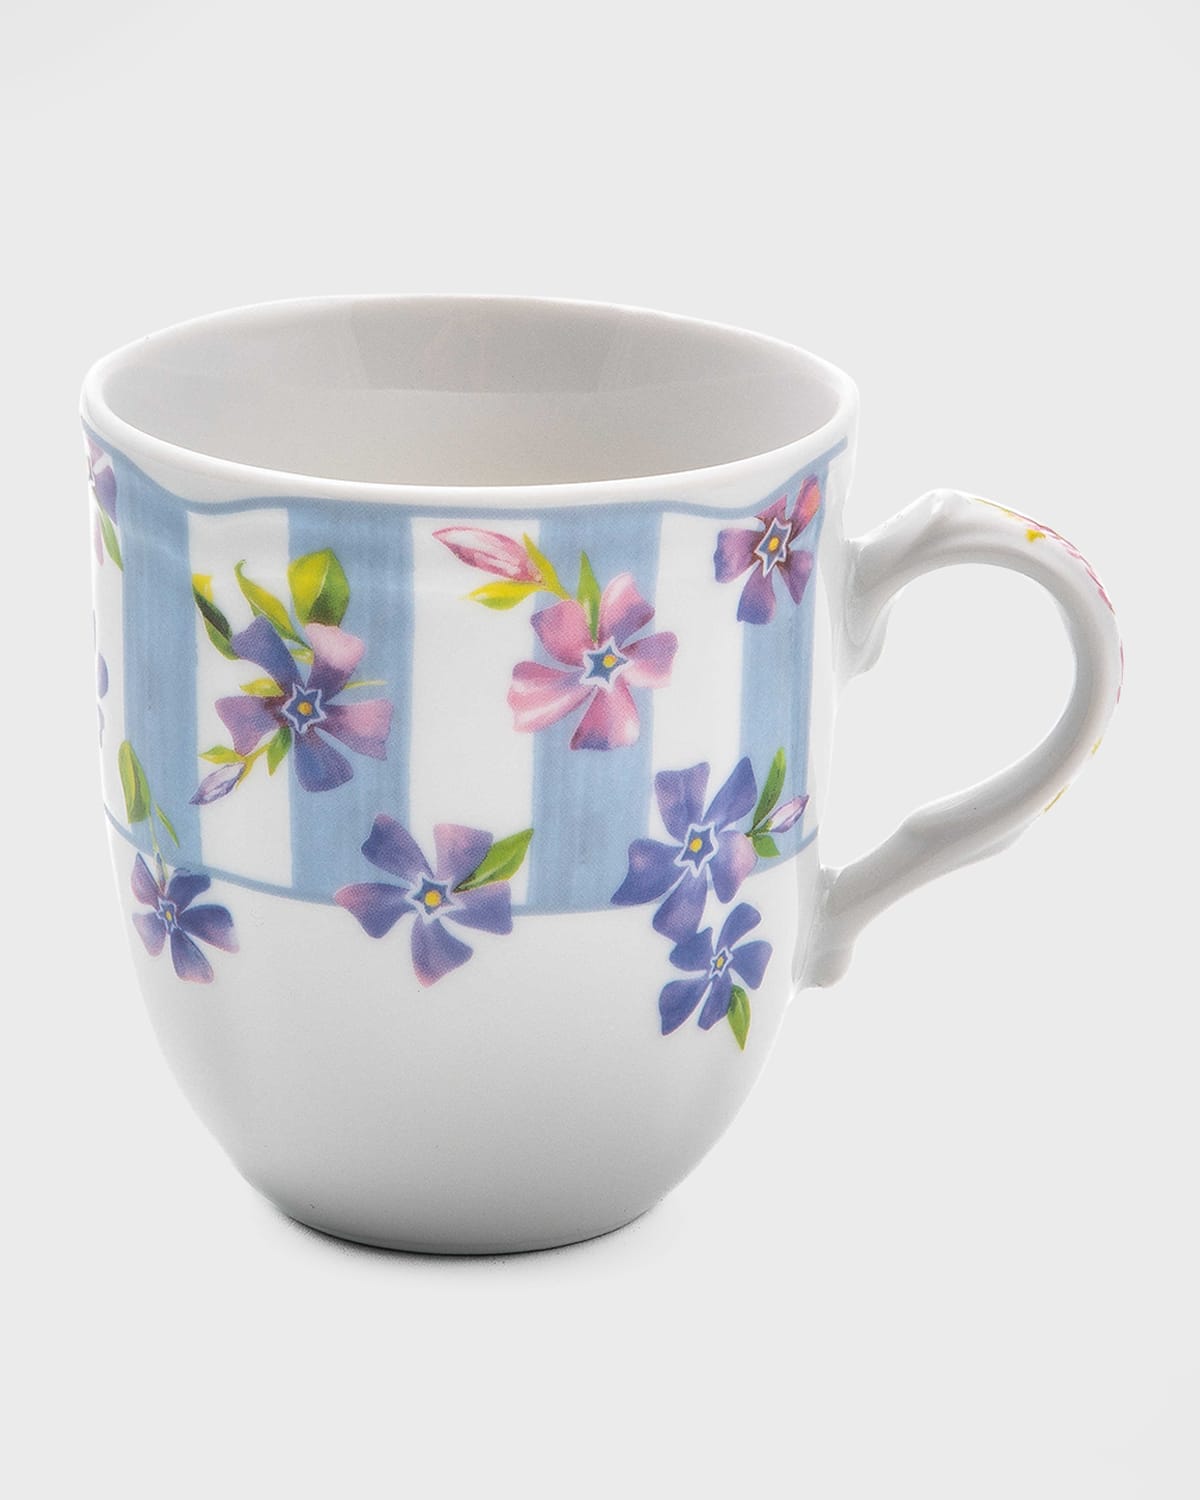 Mackenzie-childs Wildflowers Porcelain Mug